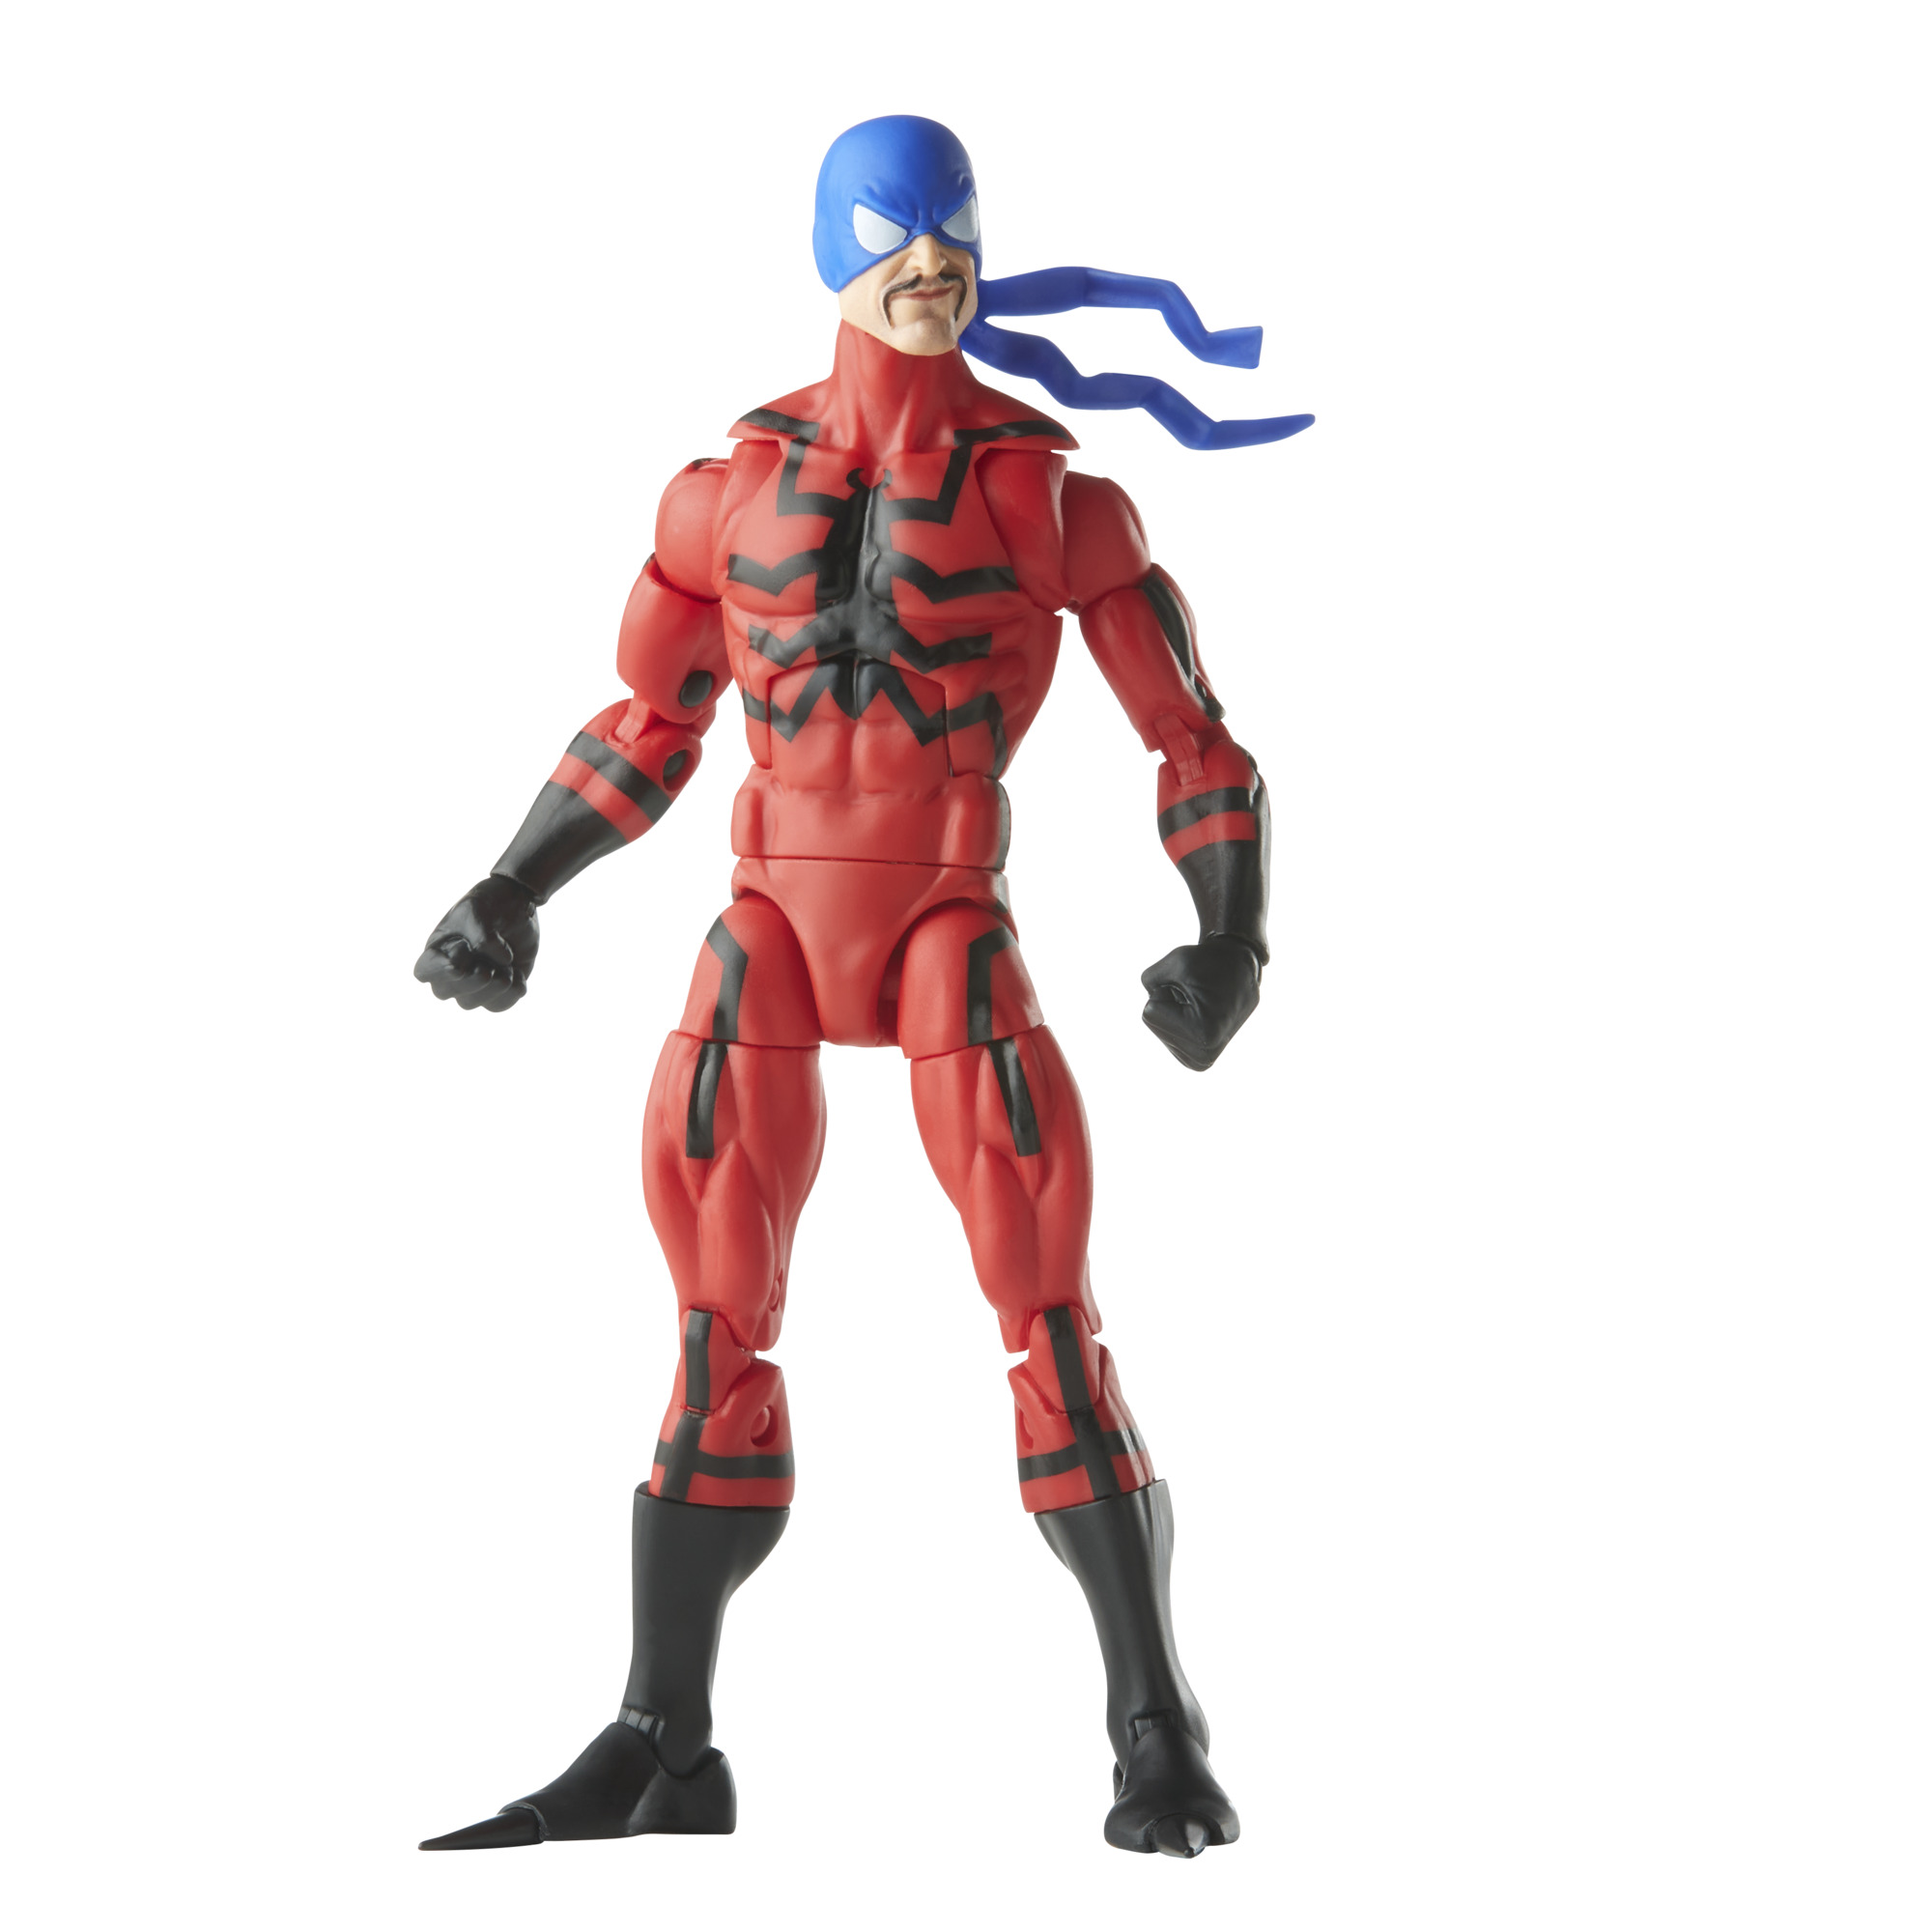 SPIDER-MAN Marvel Legends Retro Collection Marvels Tarantula Actionfigur